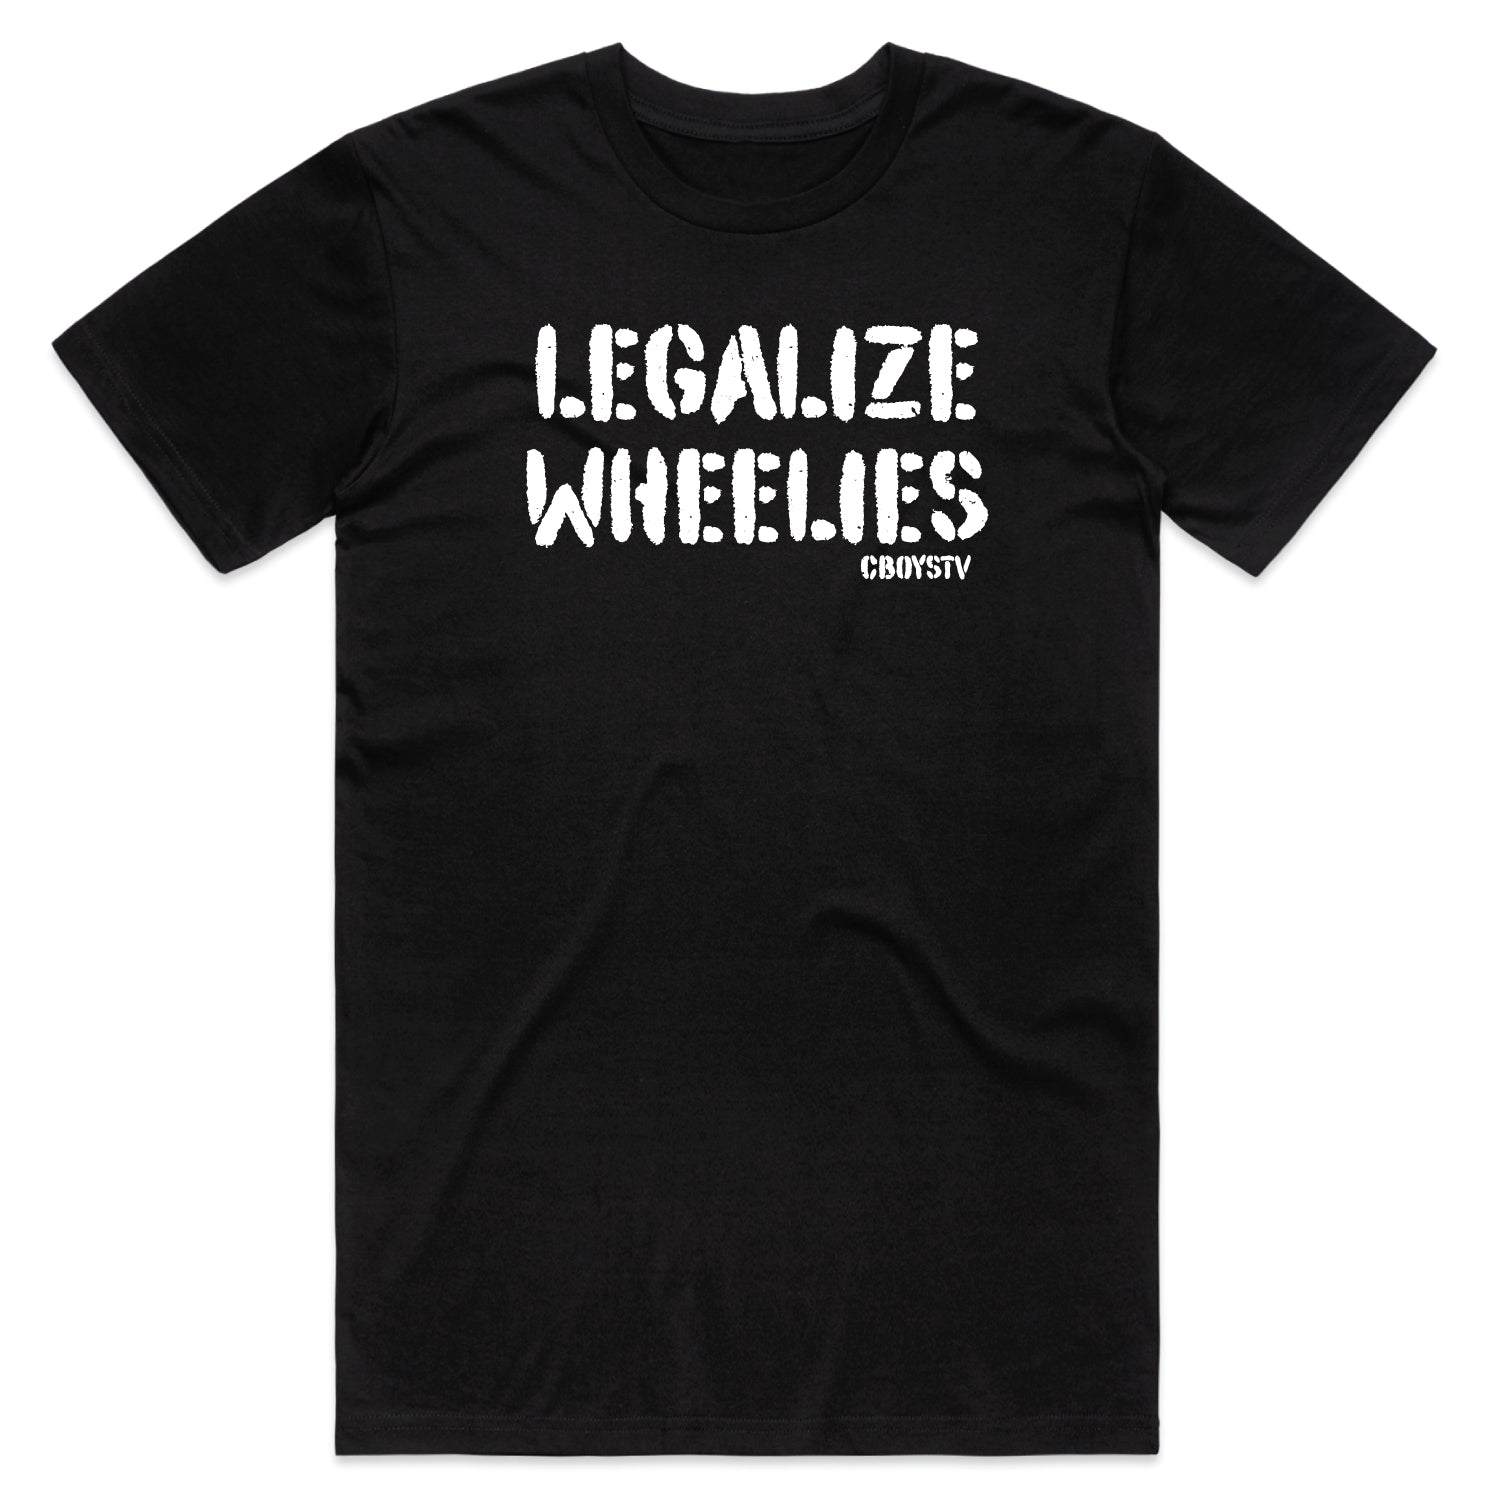 Legalize Wheelies T-shirt